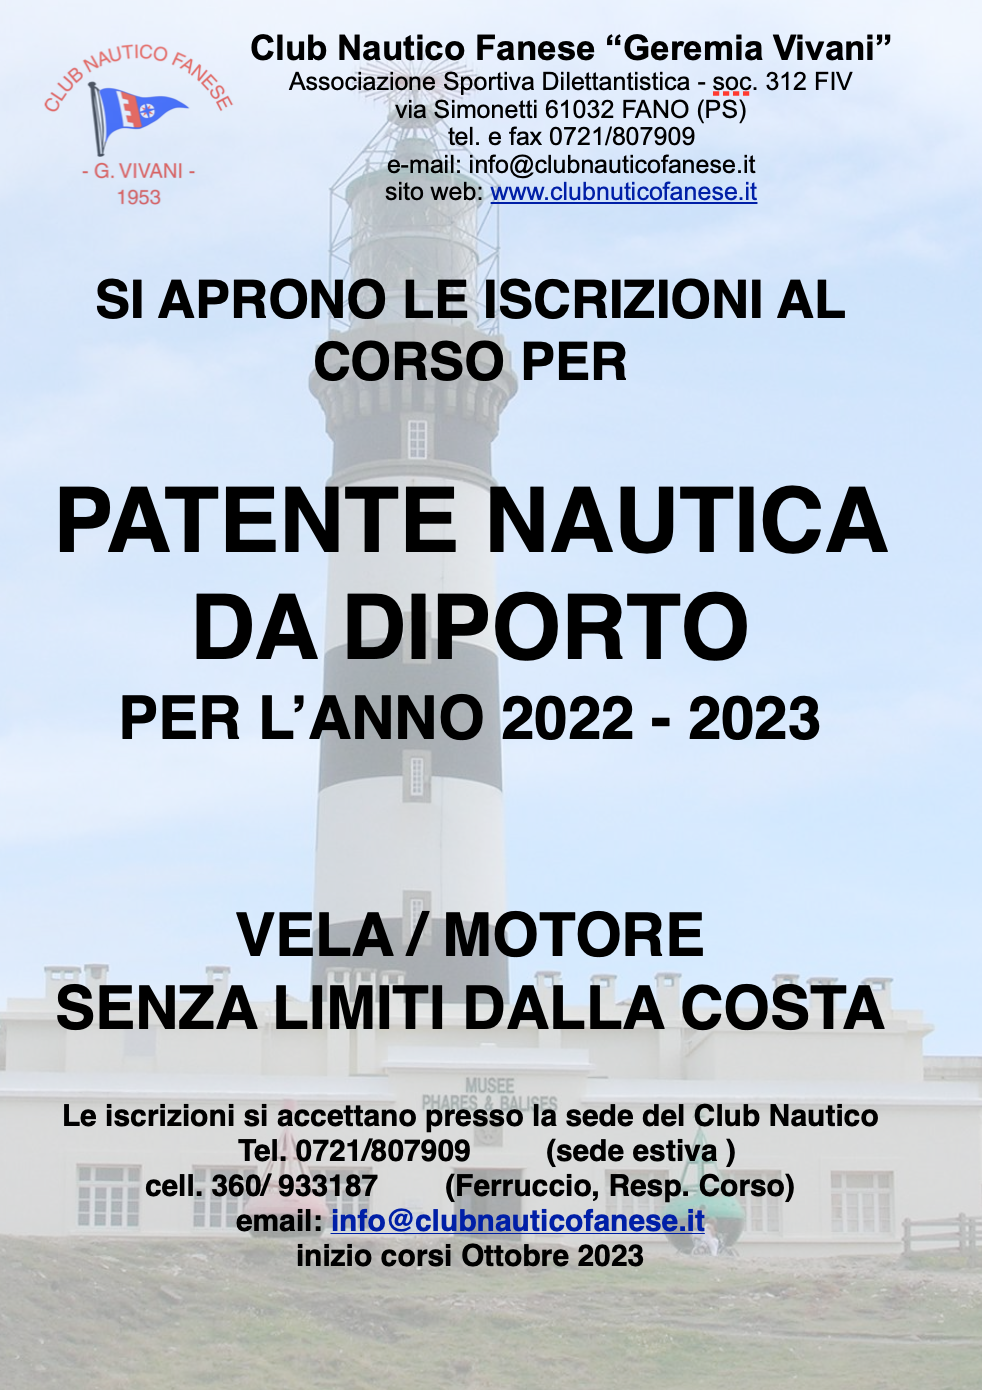 Patente Nautica - Club Nautico Fanese Geremia Vivani ASD